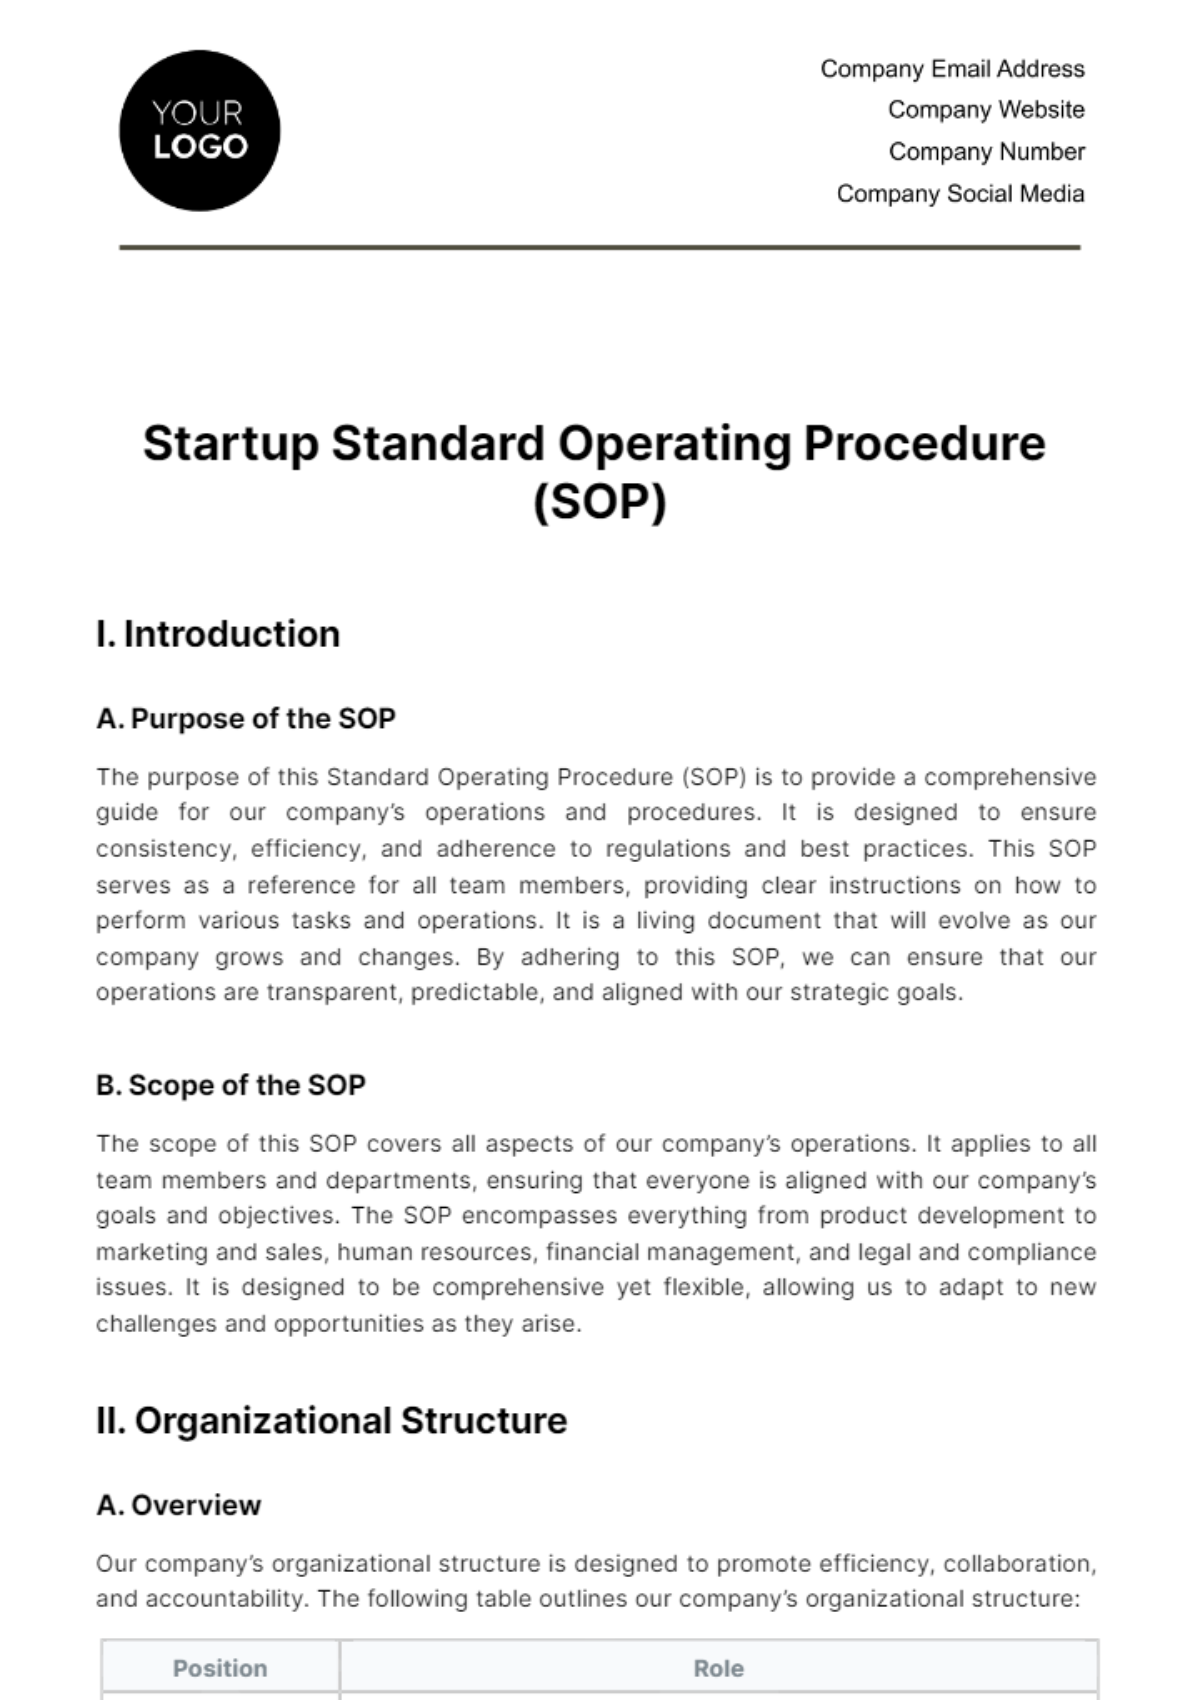 Free Startup Standard Operating Procedure (SOP) Template